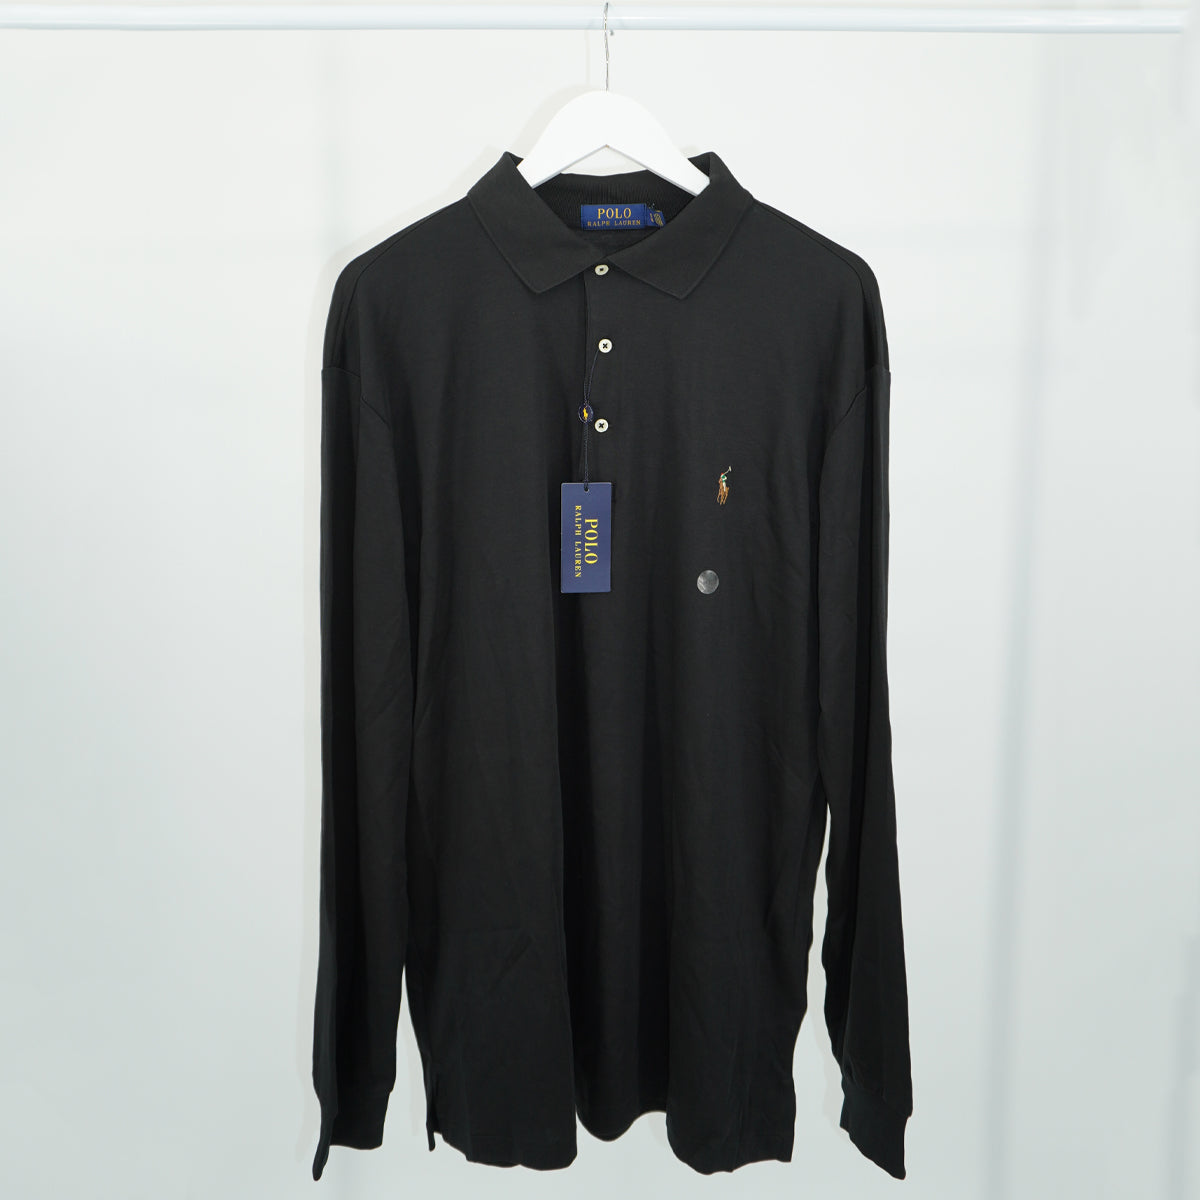 Ralph Lauren Polo Shirt Big & Tall Shirt in Black- Large Tall